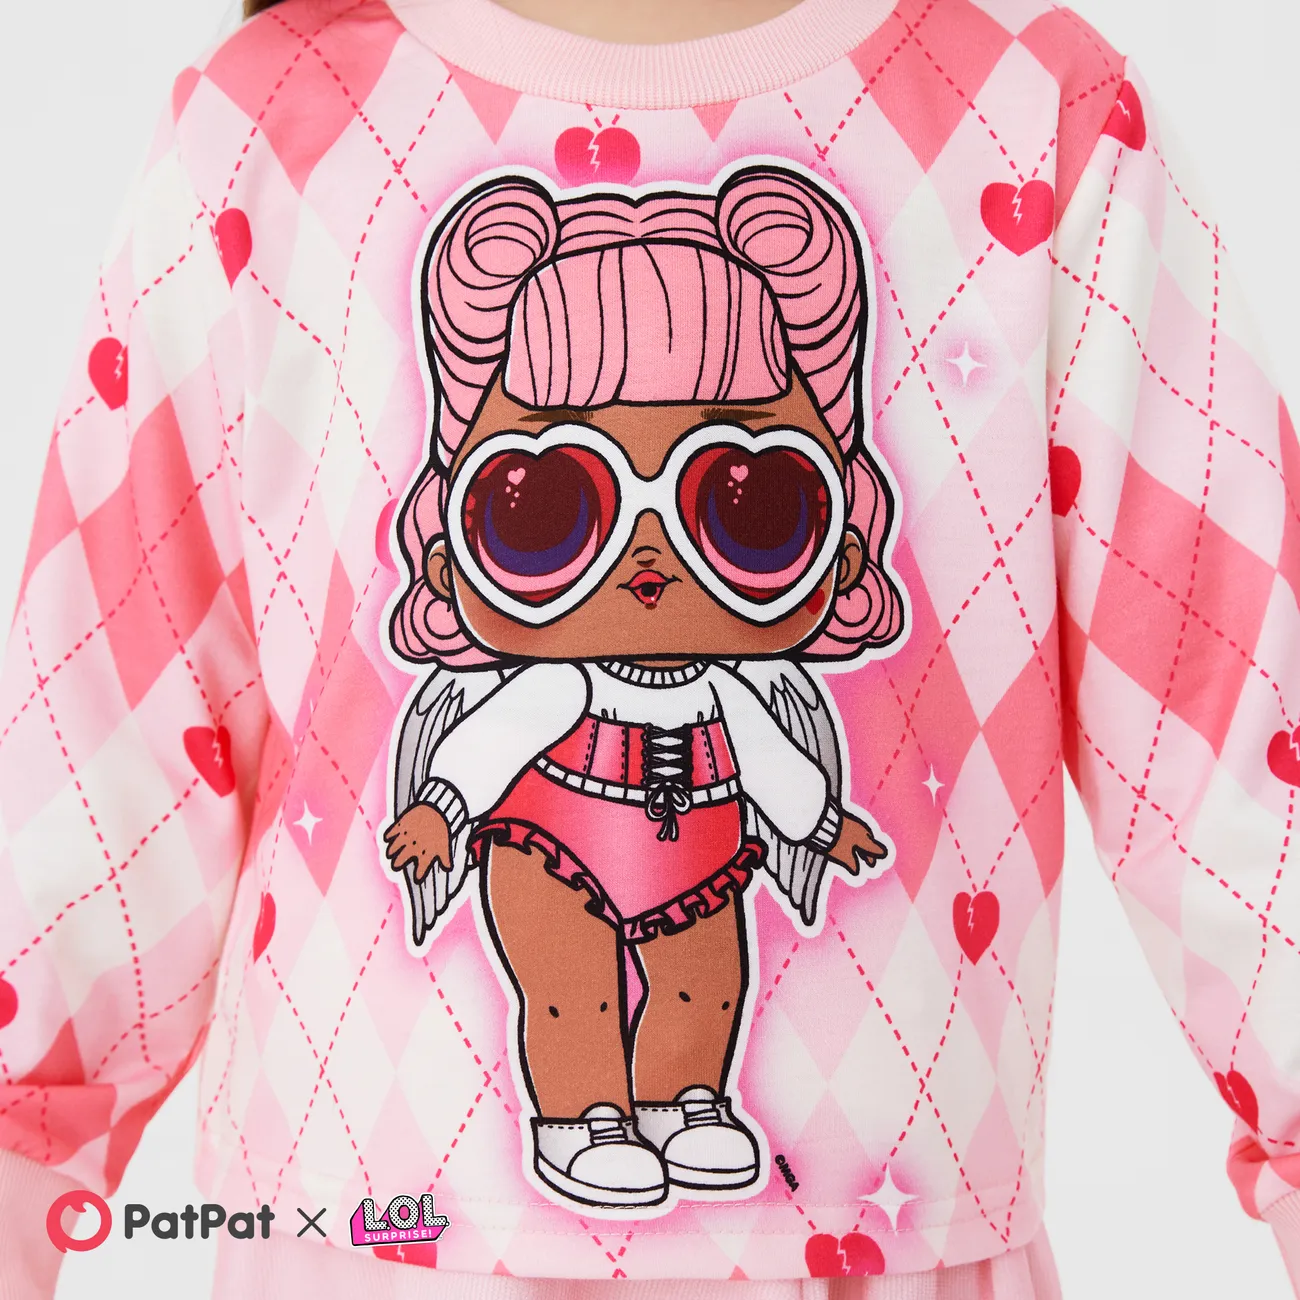 L.O.L. SURPRISE! 2pcs Kid Girl Letter Print Sweatshirt and Plaid/Pink Bow Design Smocked Skirt Set Pink big image 1